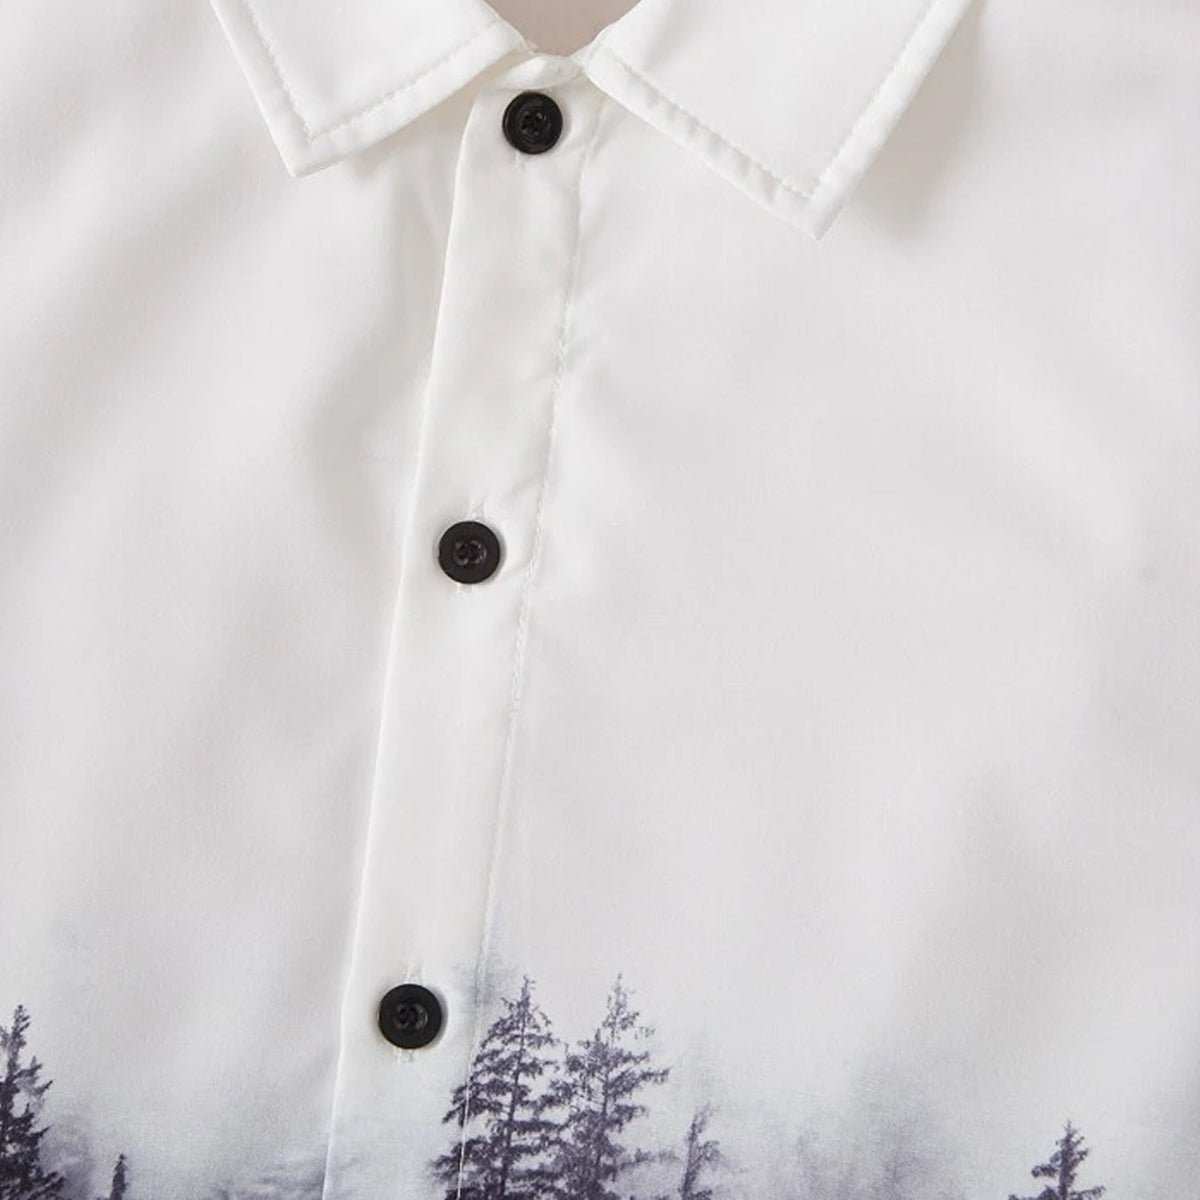 Venutaloza Tropical Casual Tree & Outdoor Tree Designer Button Front Shirt For Boy.